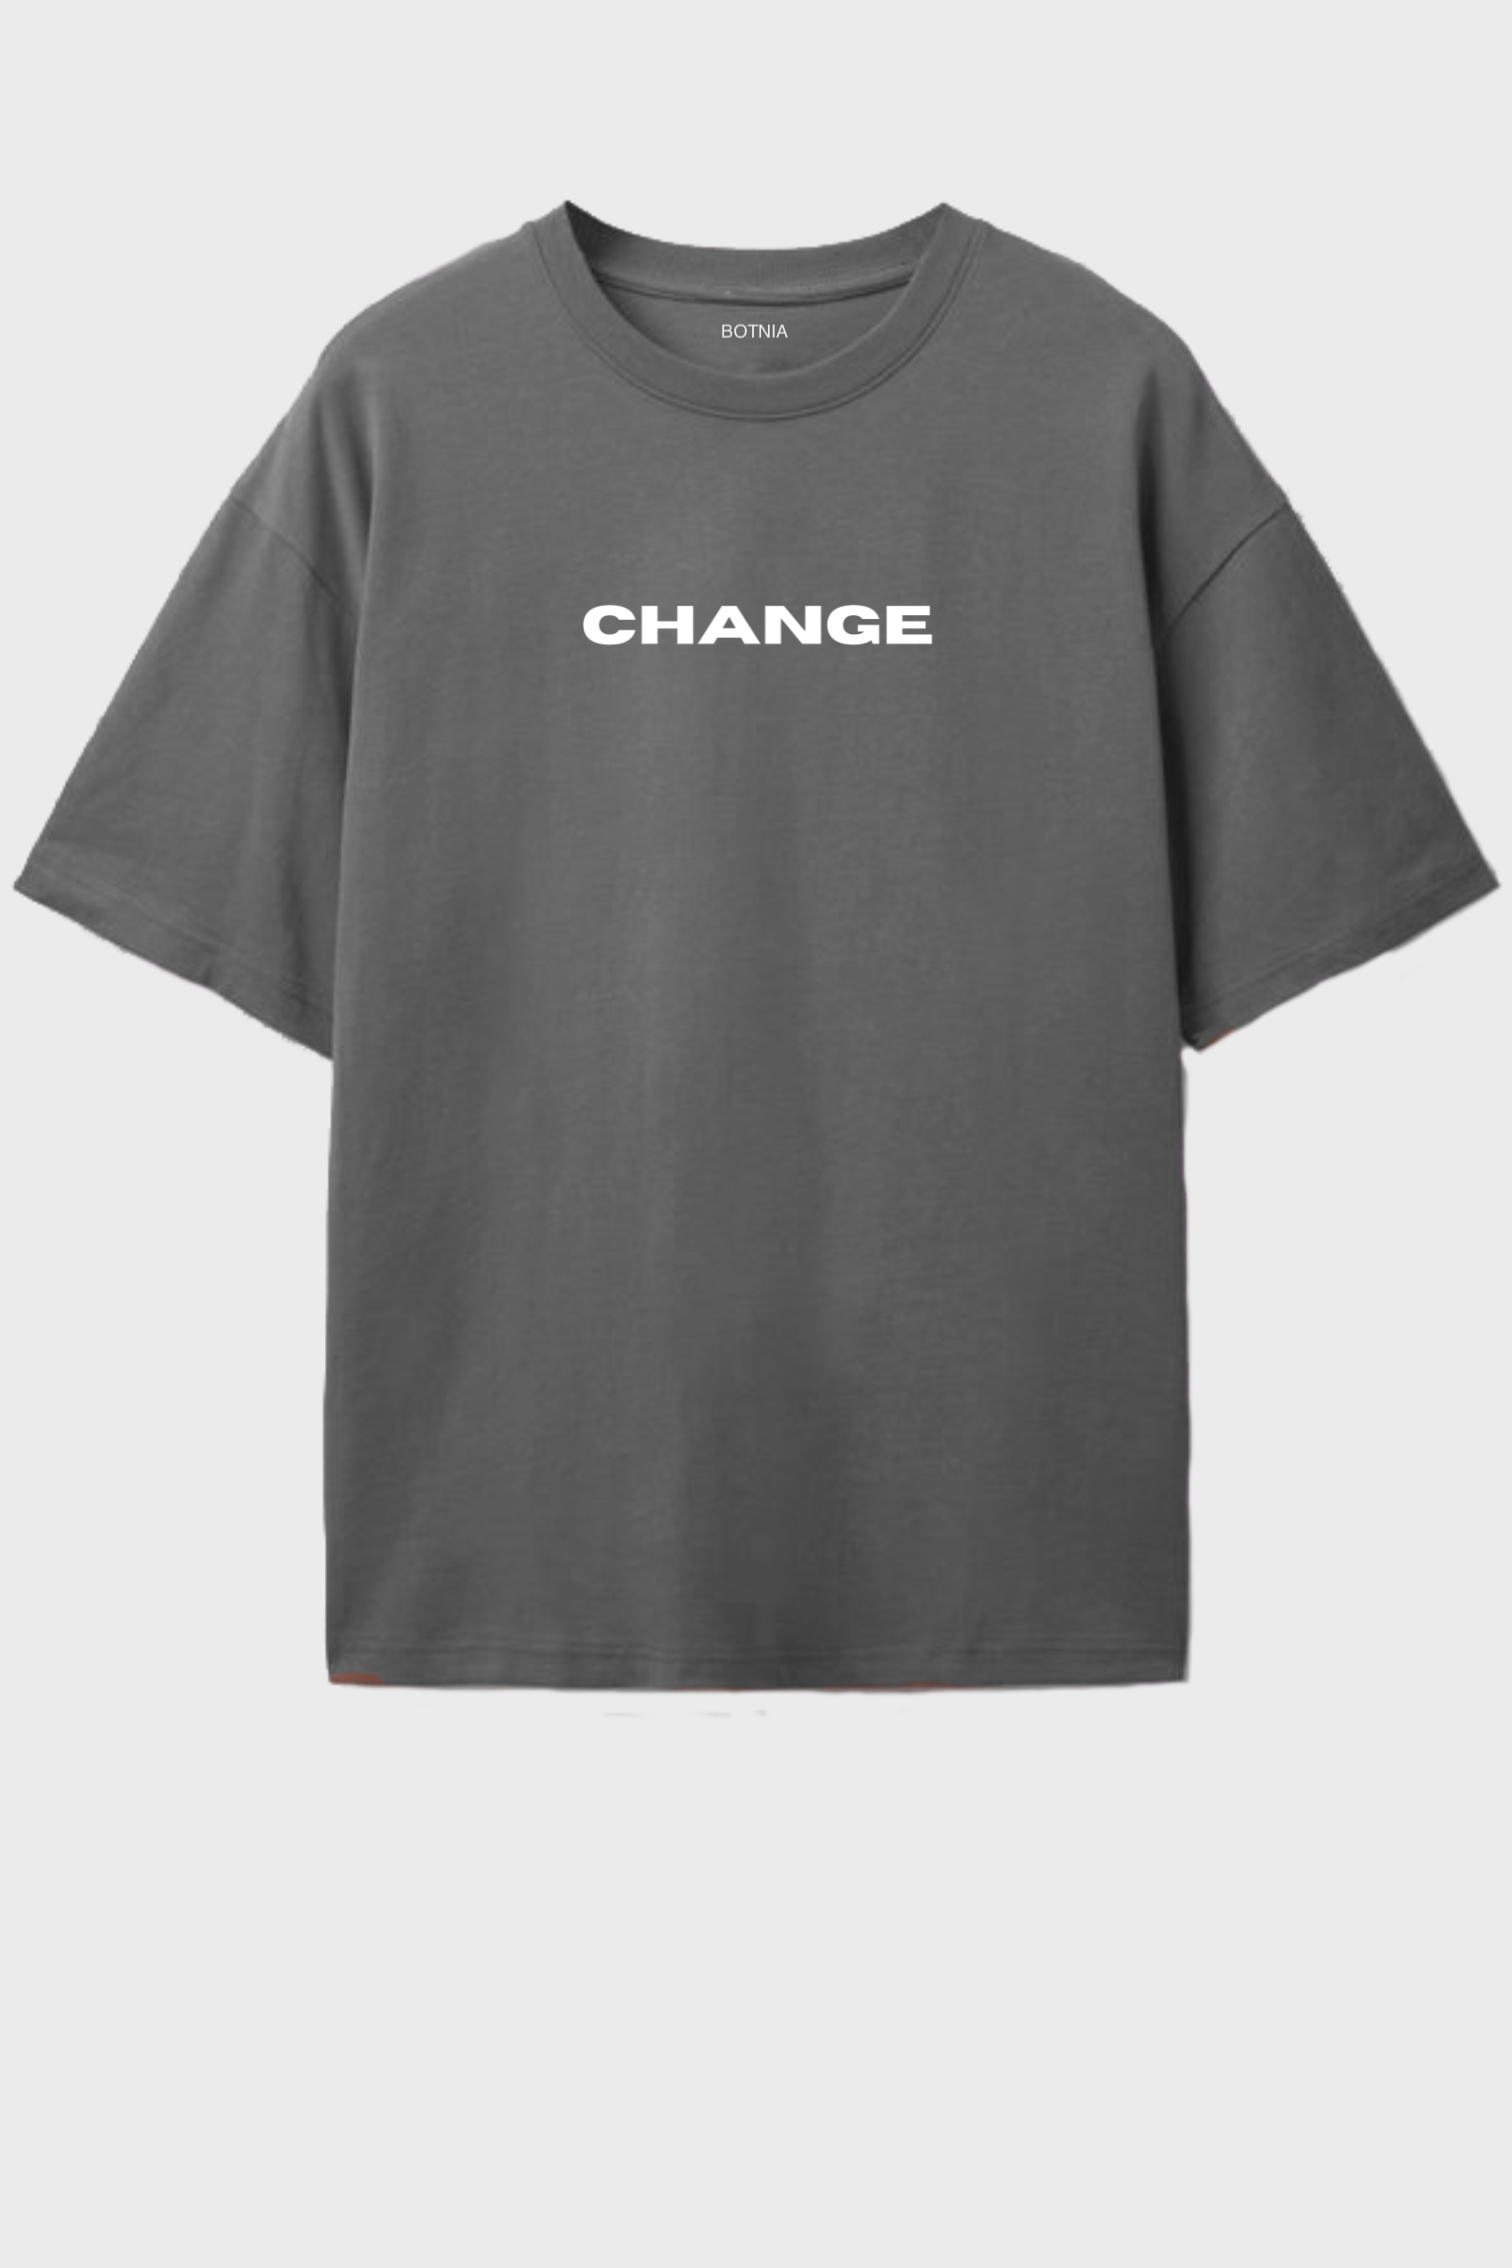 Change, Never Look Back- Oversized t-shirt